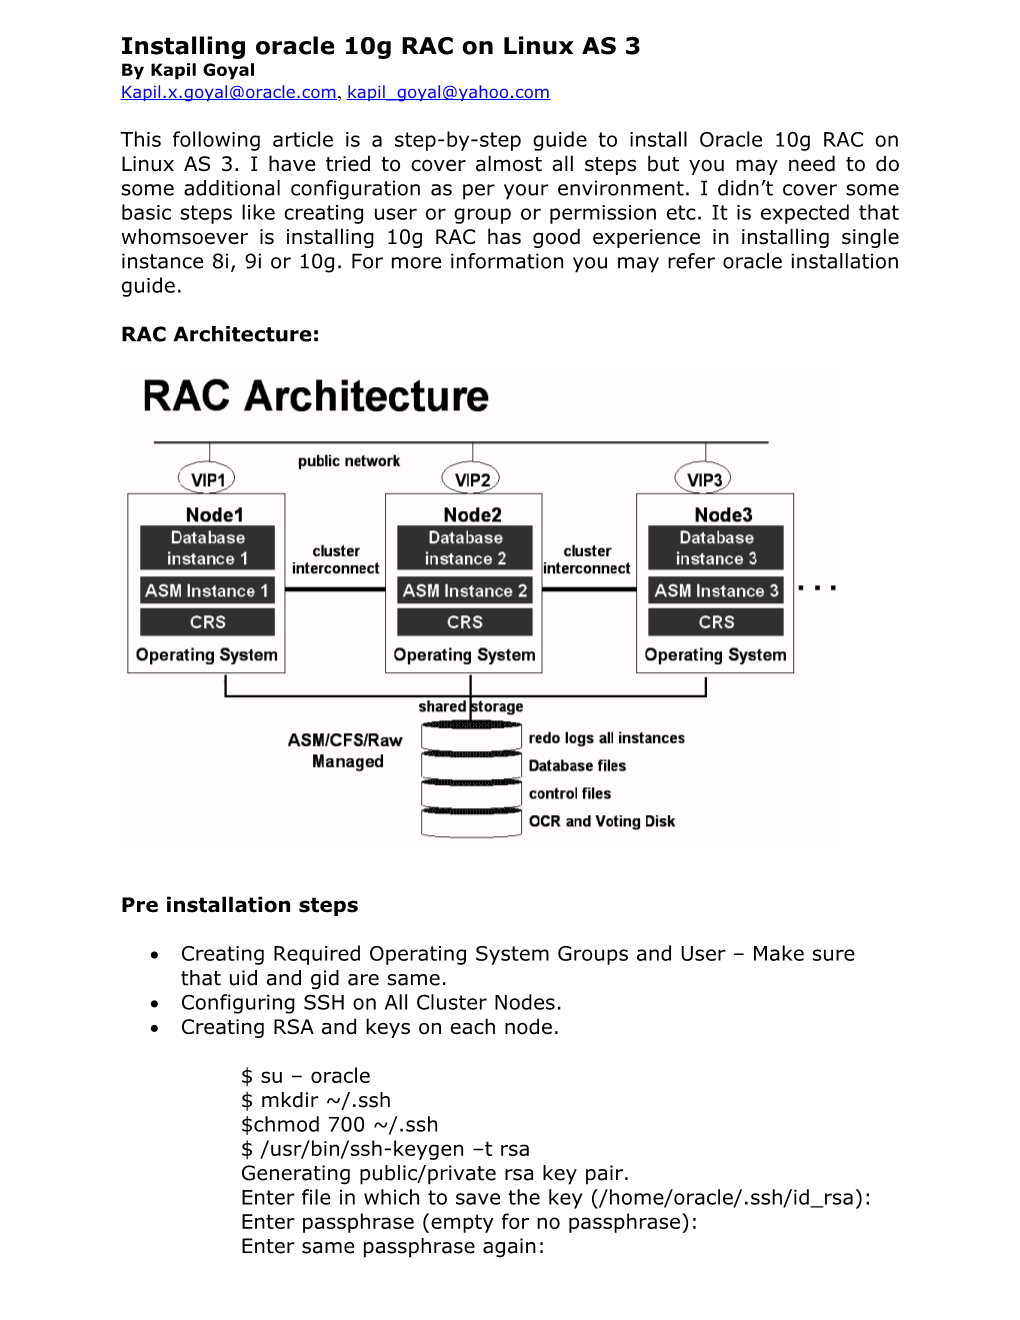 Installing Oracle 10G RAC on Linux AS 3